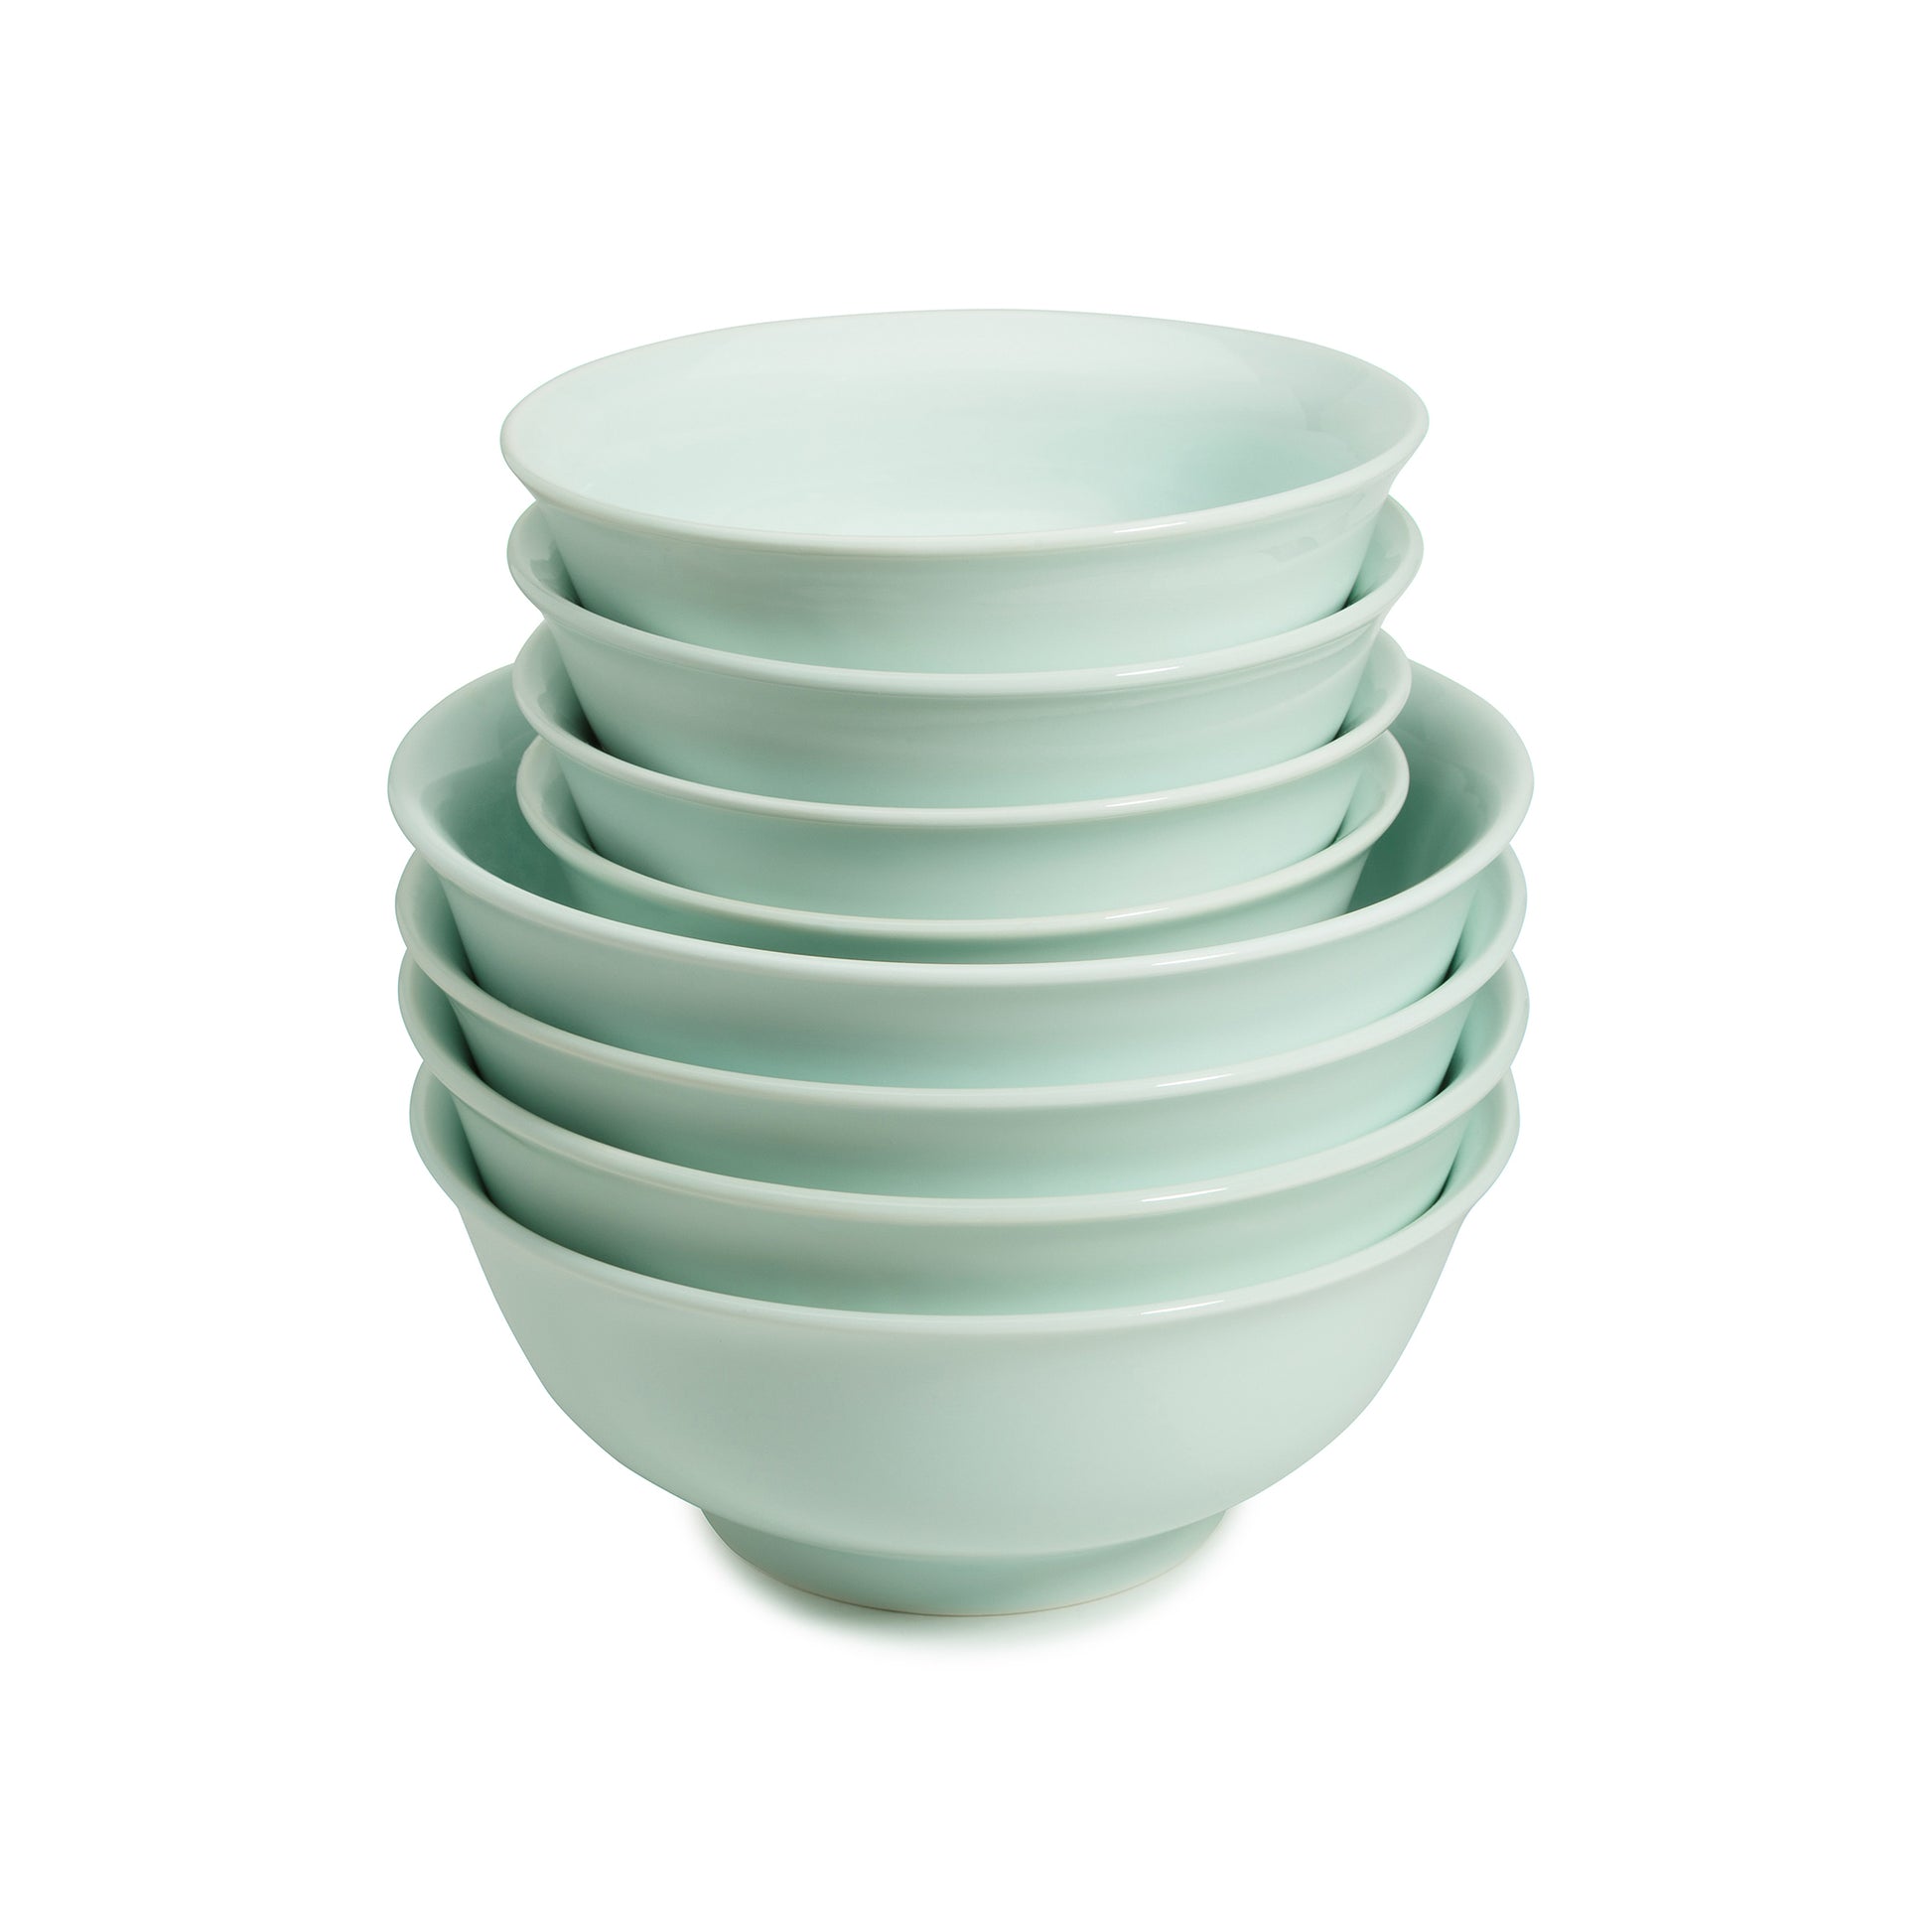 8 piece green celadon porcelain Zhengde bowl set, all stacked, media 2 of 4